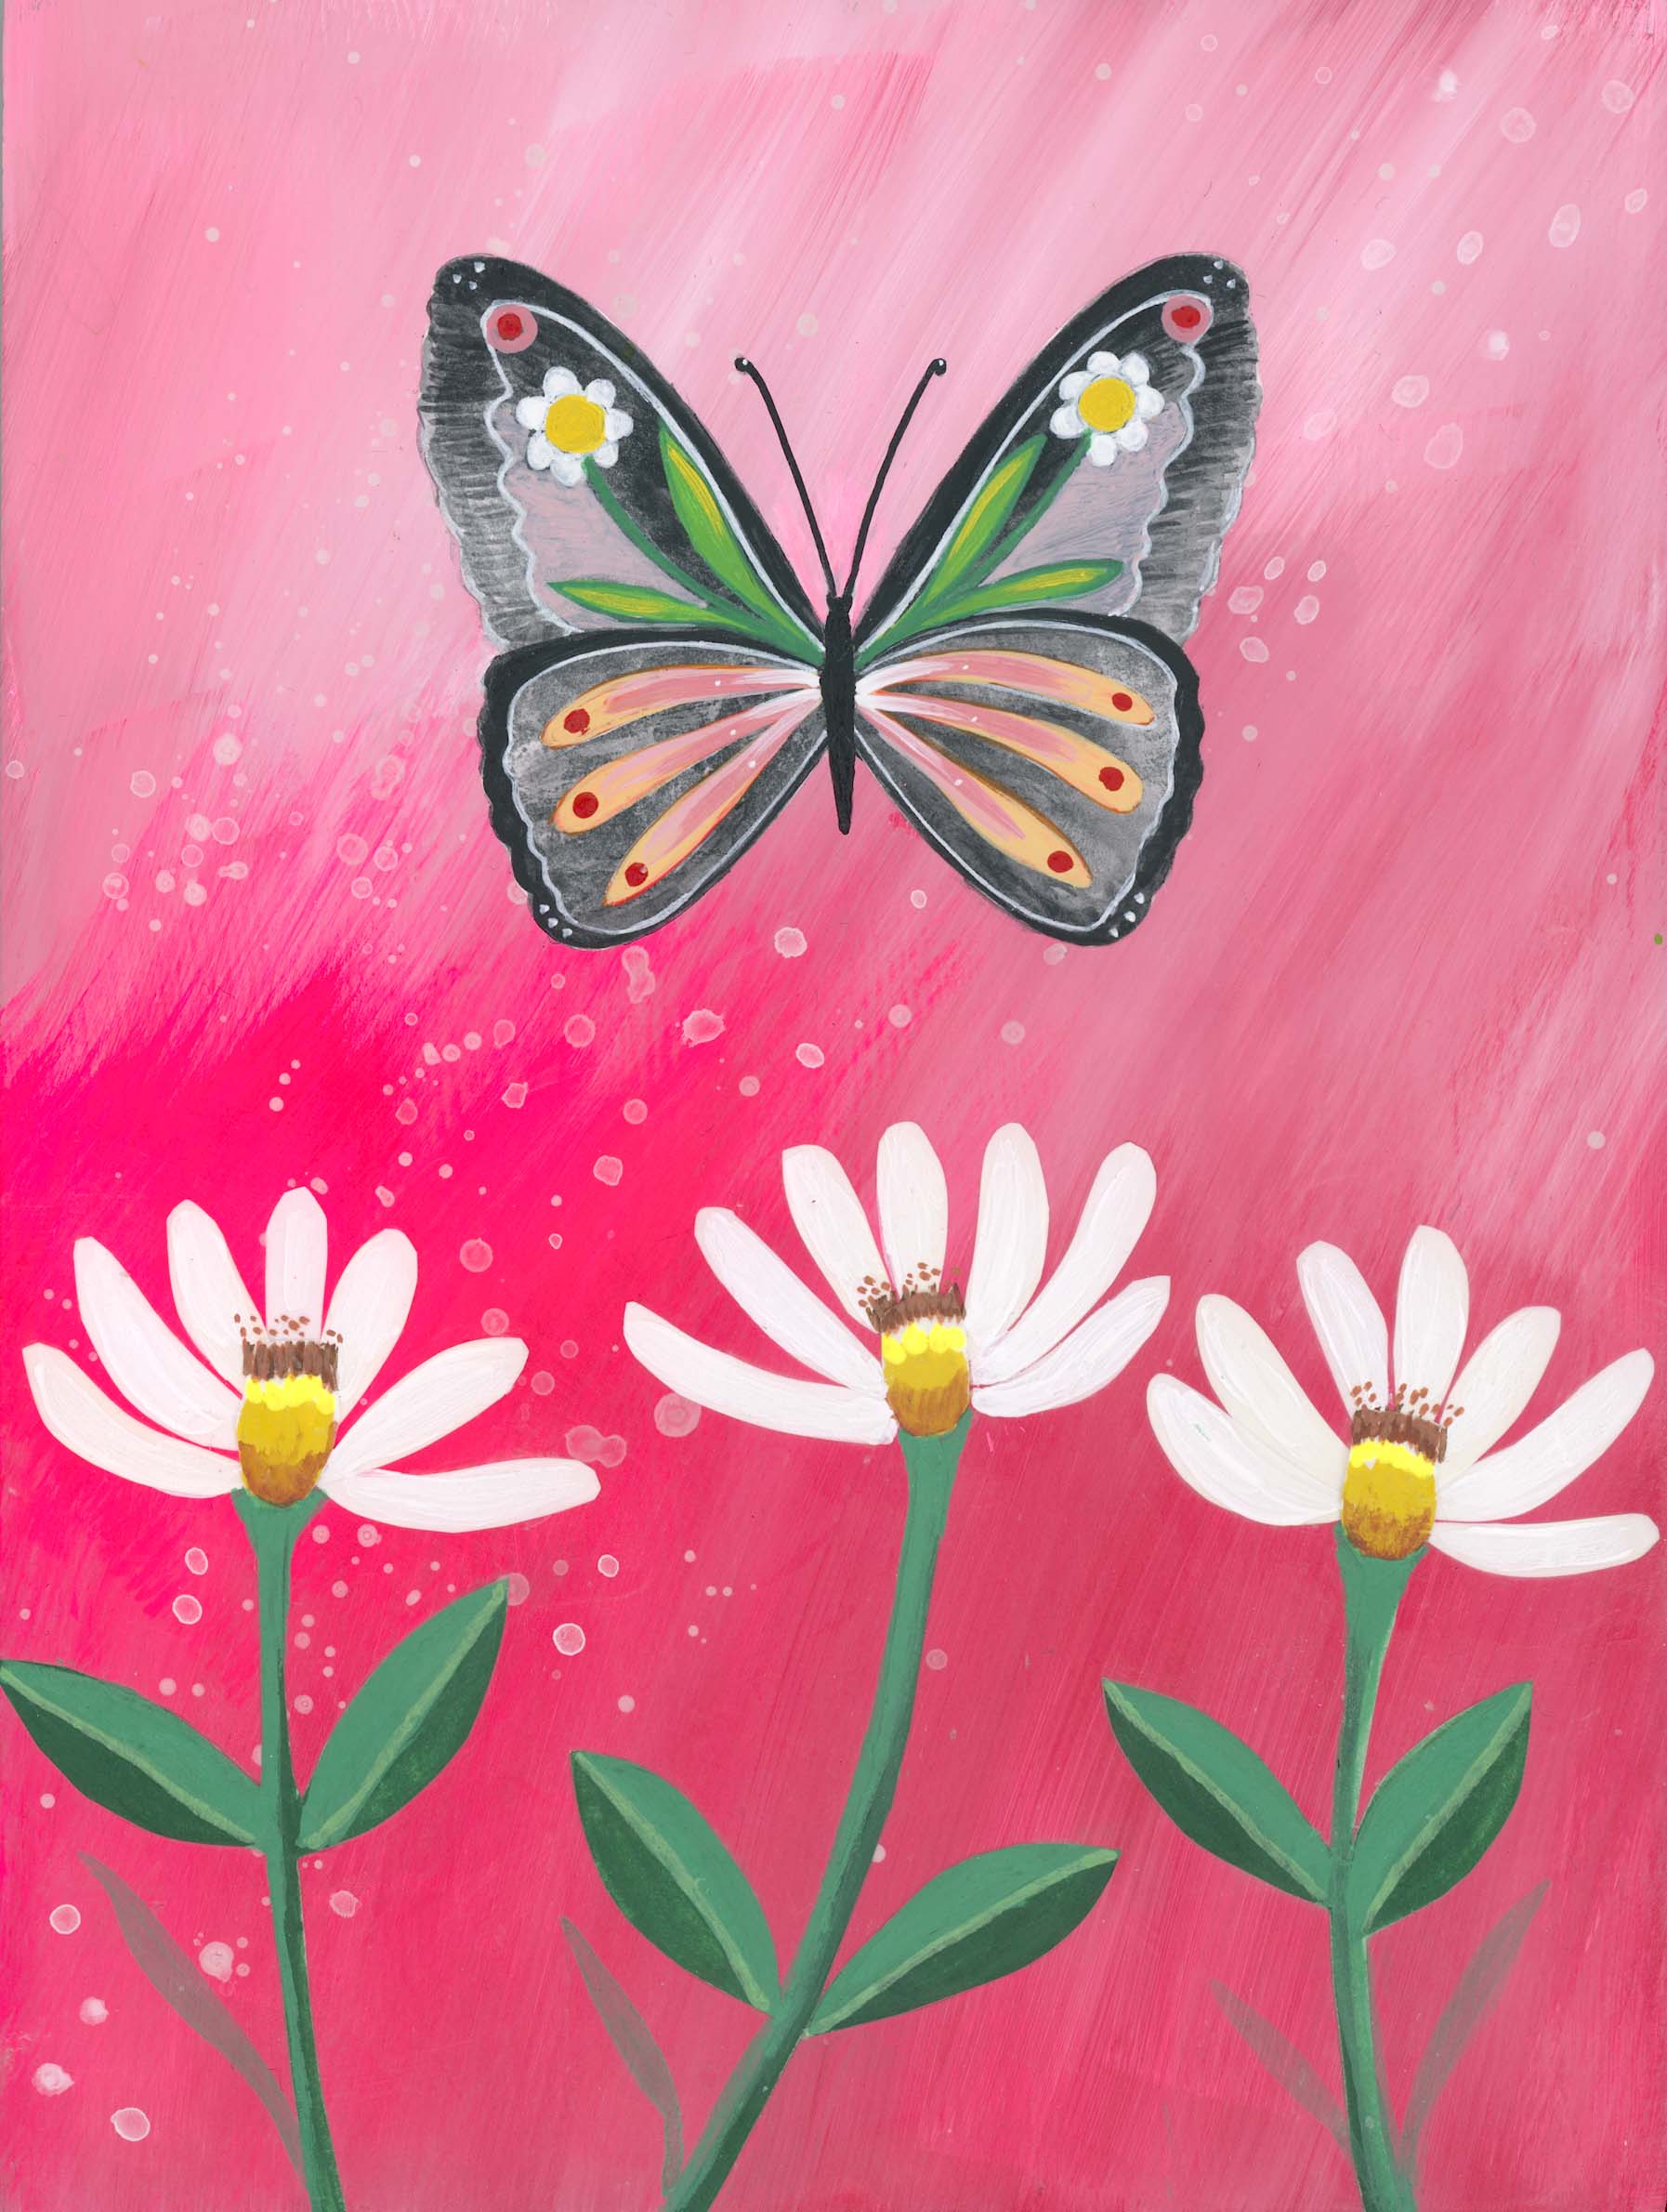 Butterfly Garden Pink Sky (6x8) Original Mixed Media Painting